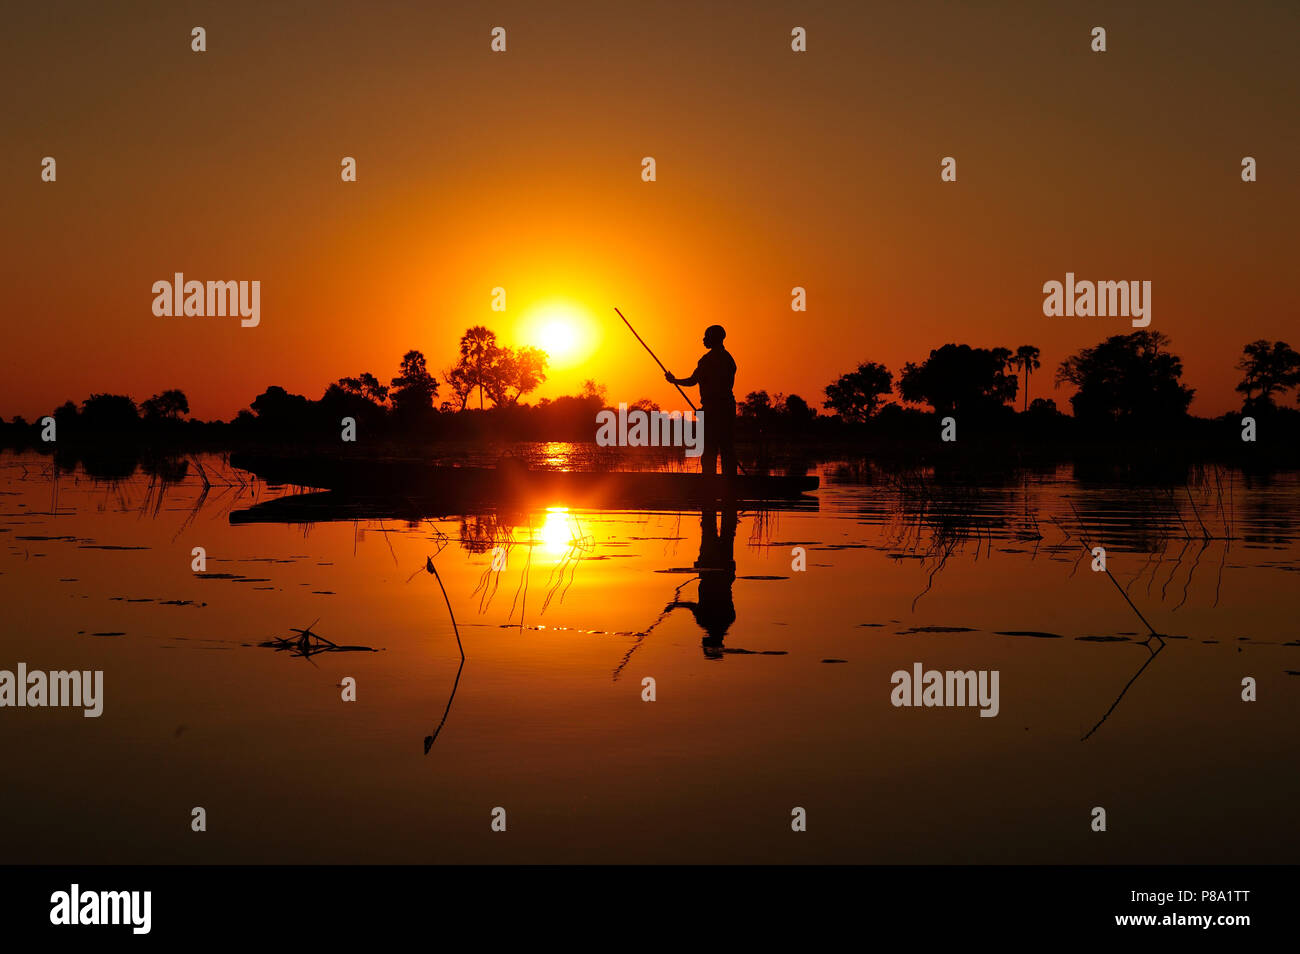 Local bargeman sails in traditional Mokoro dugout boat at sunset, Okavango Delta, Botswana Stock Photo